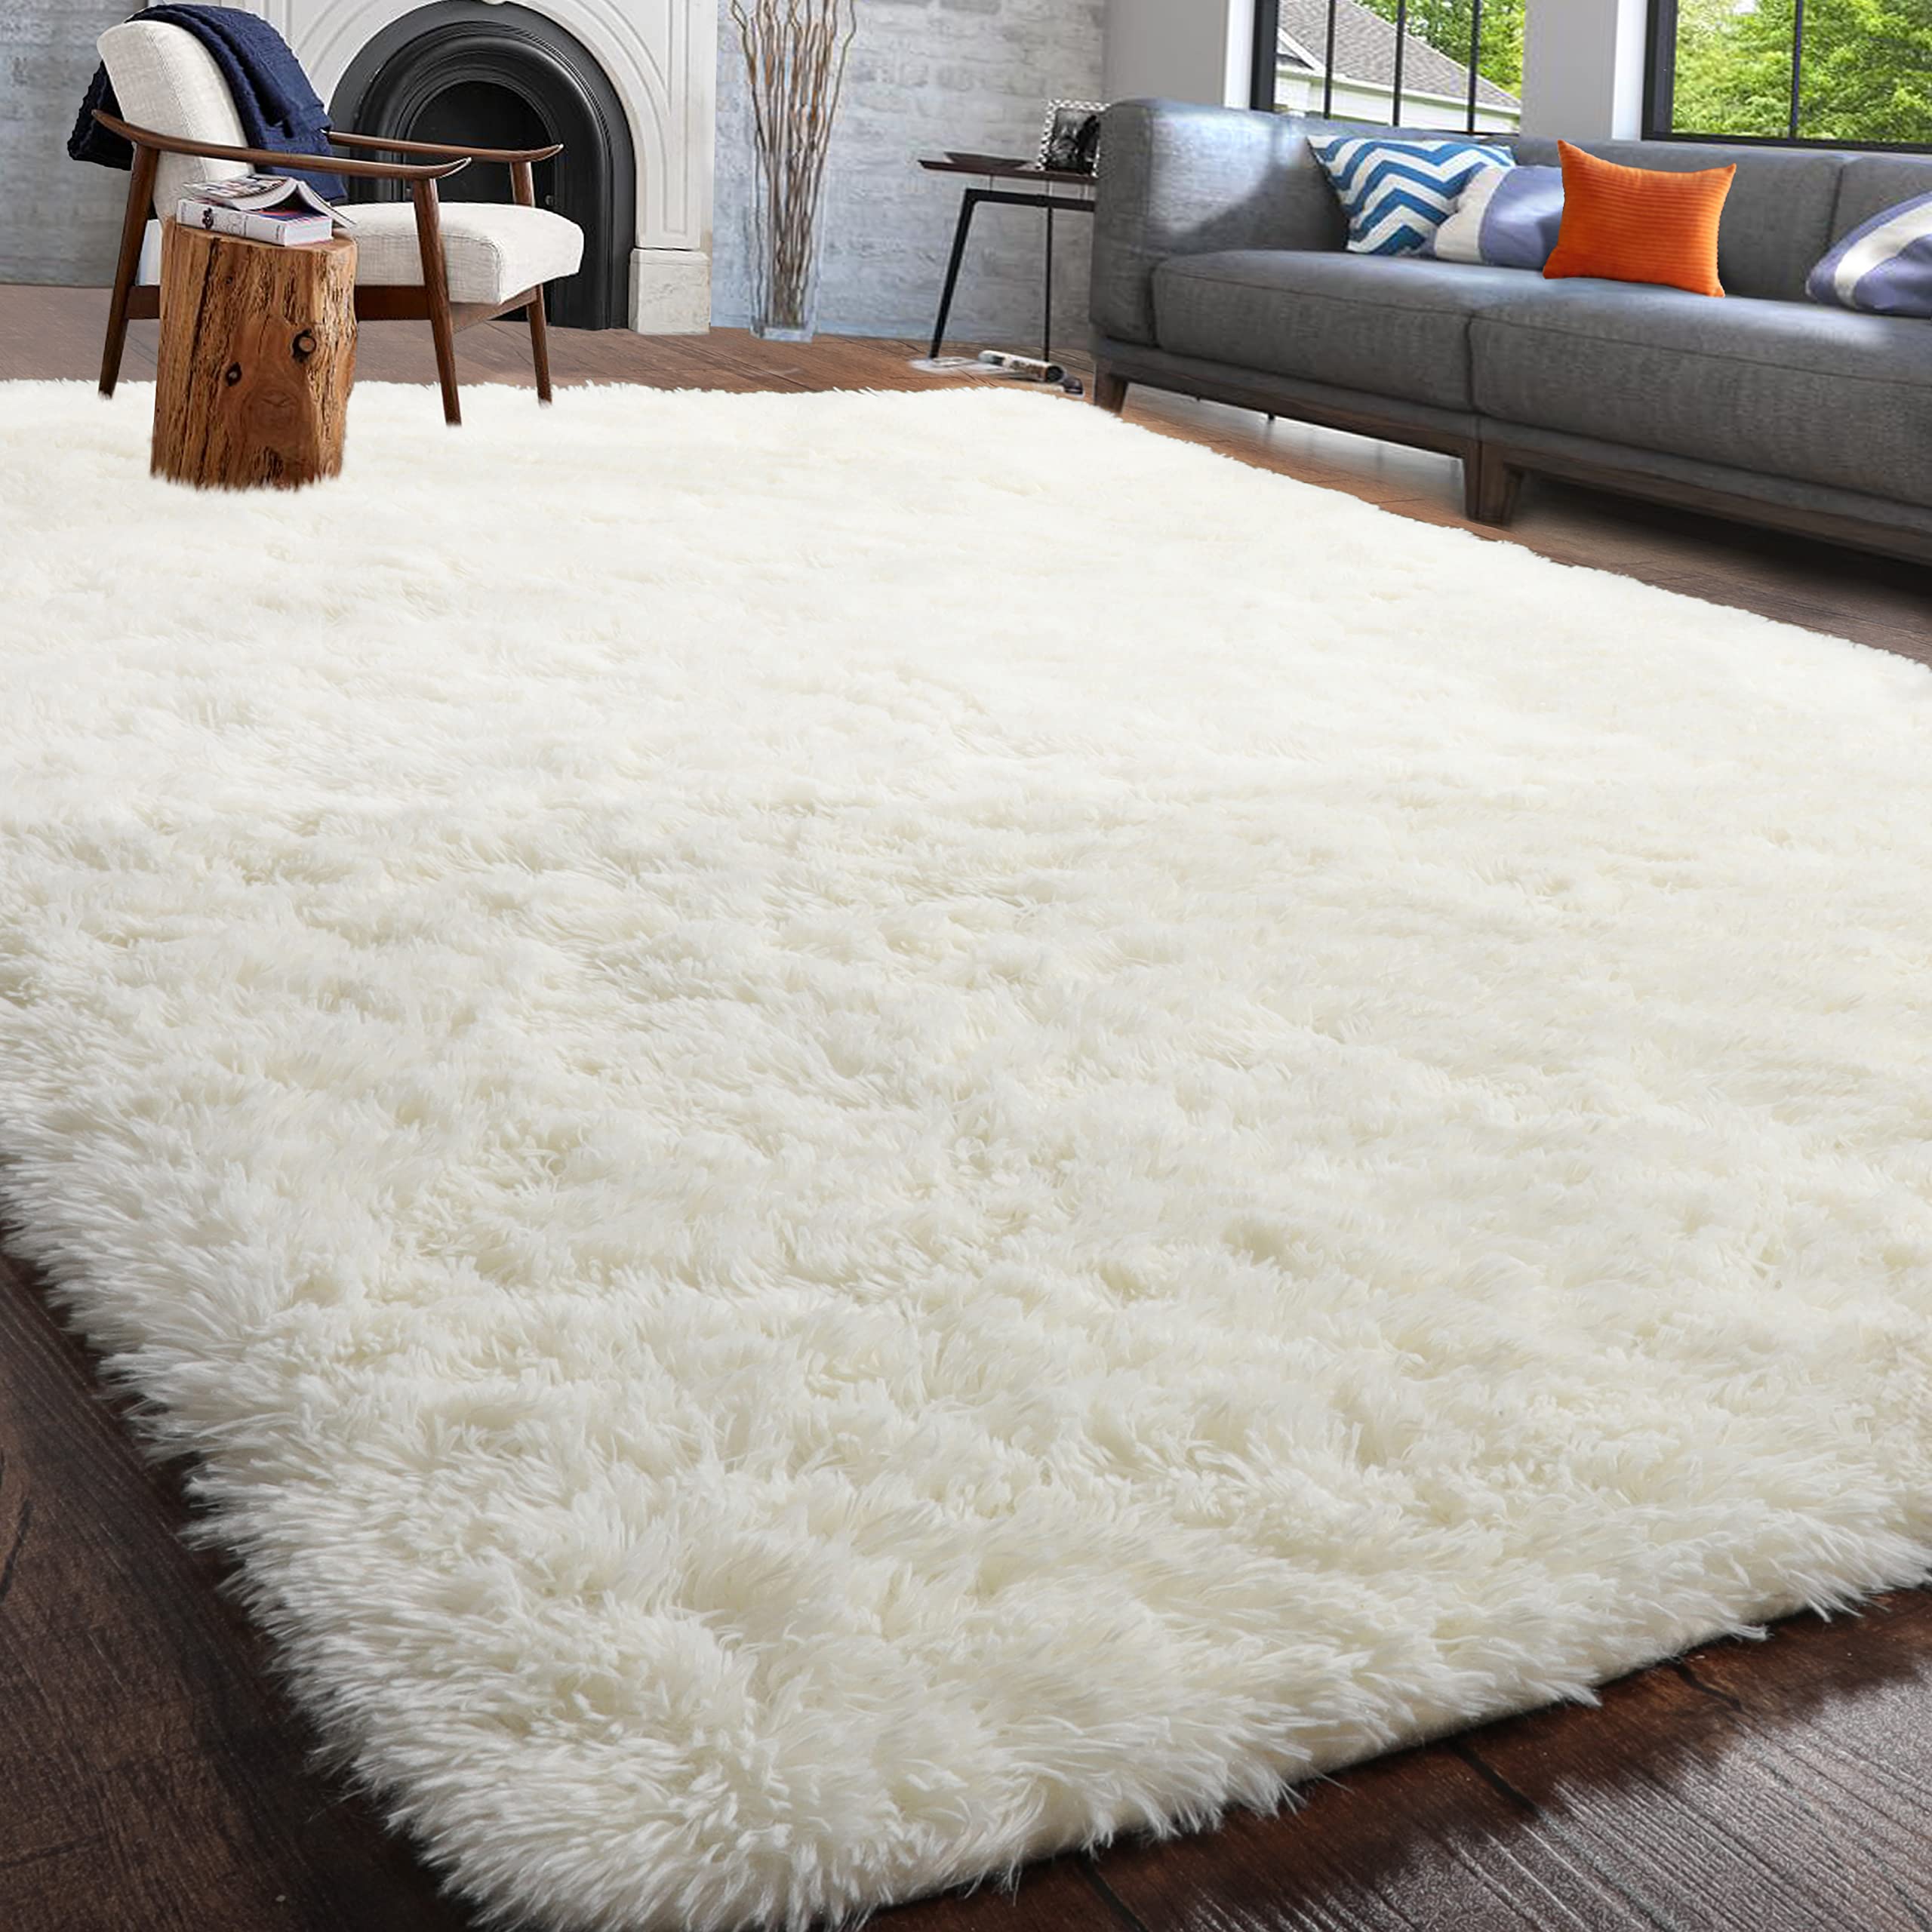 Soft carpet or rug.